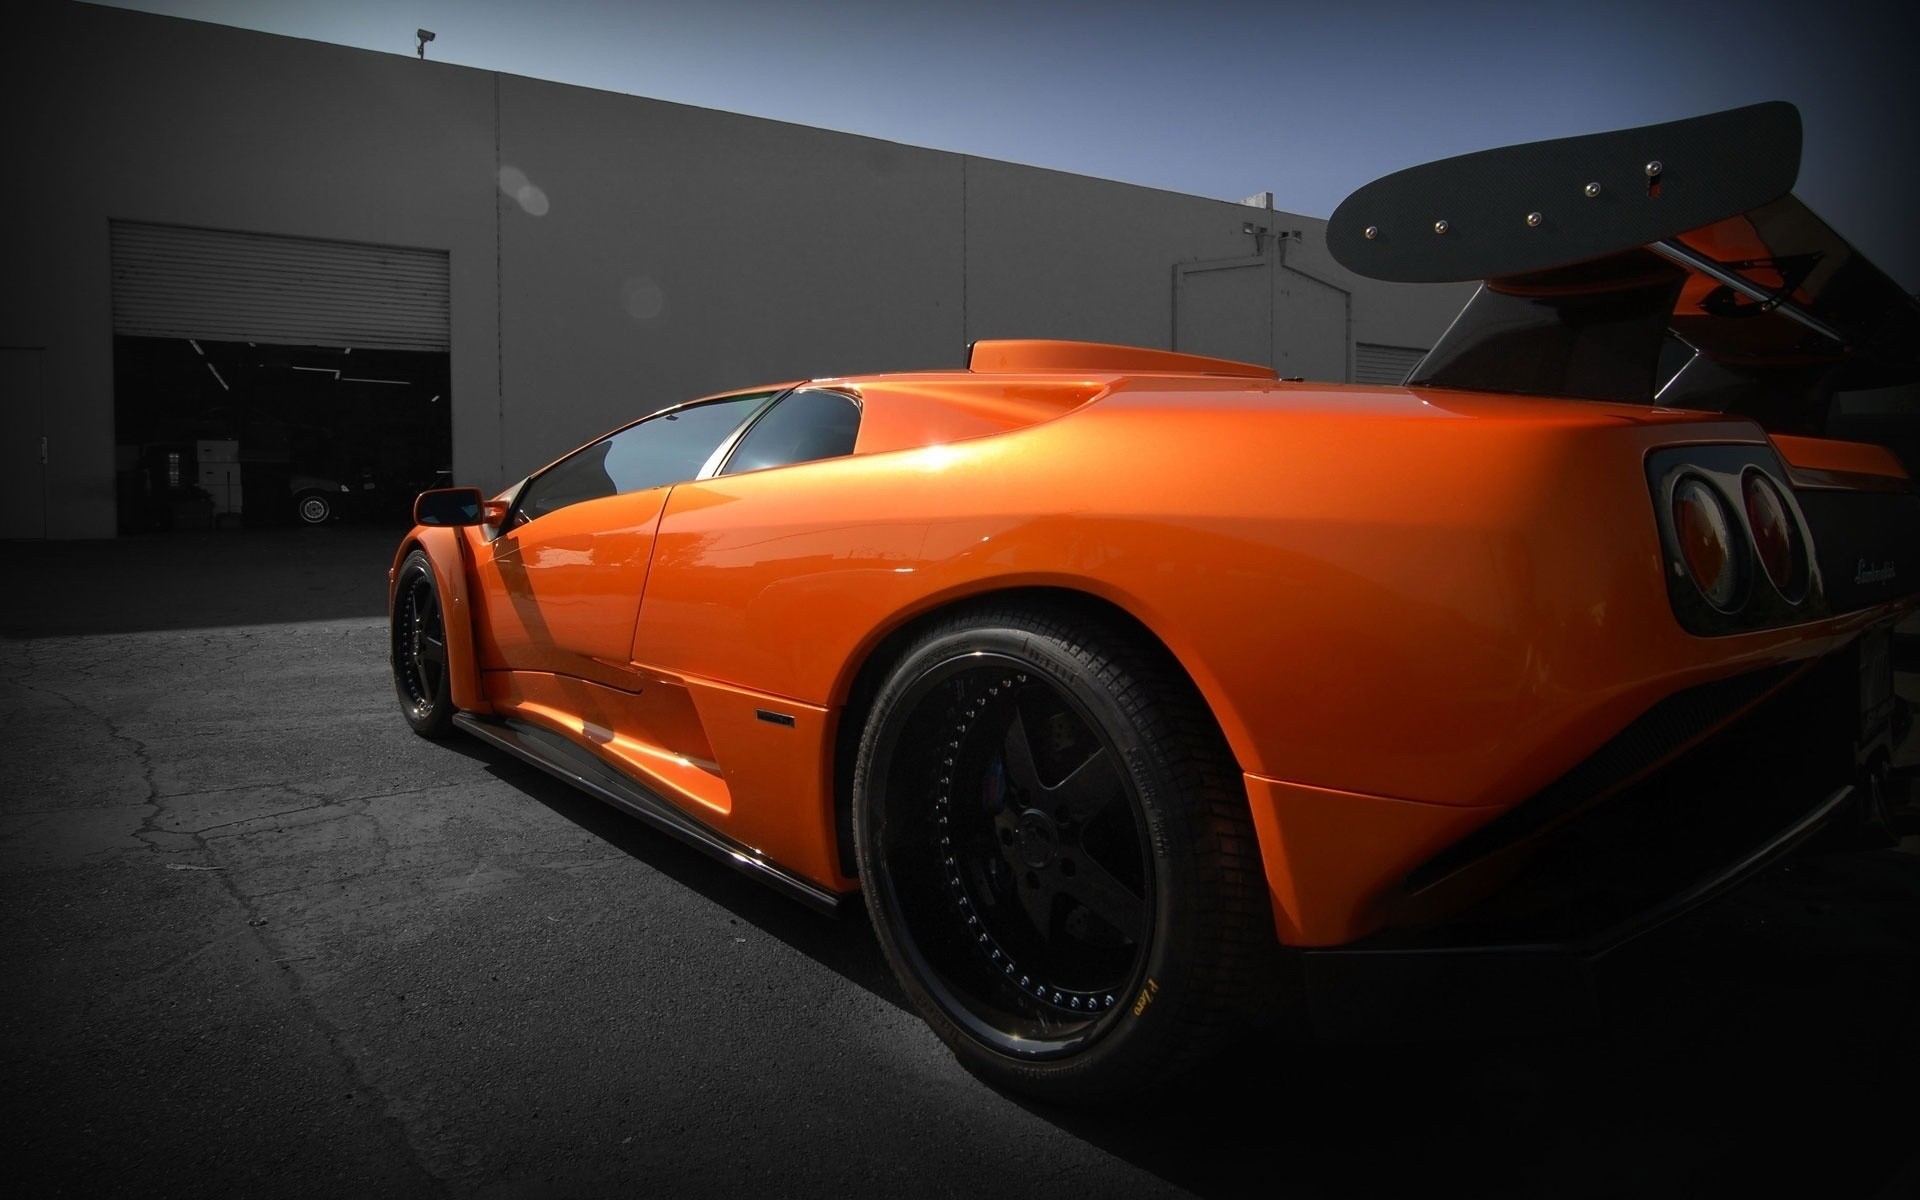 General 1920x1200 car orange cars vehicle supercars Lamborghini Lamborghini Diablo italian cars Volkswagen Group car spoiler rear wing